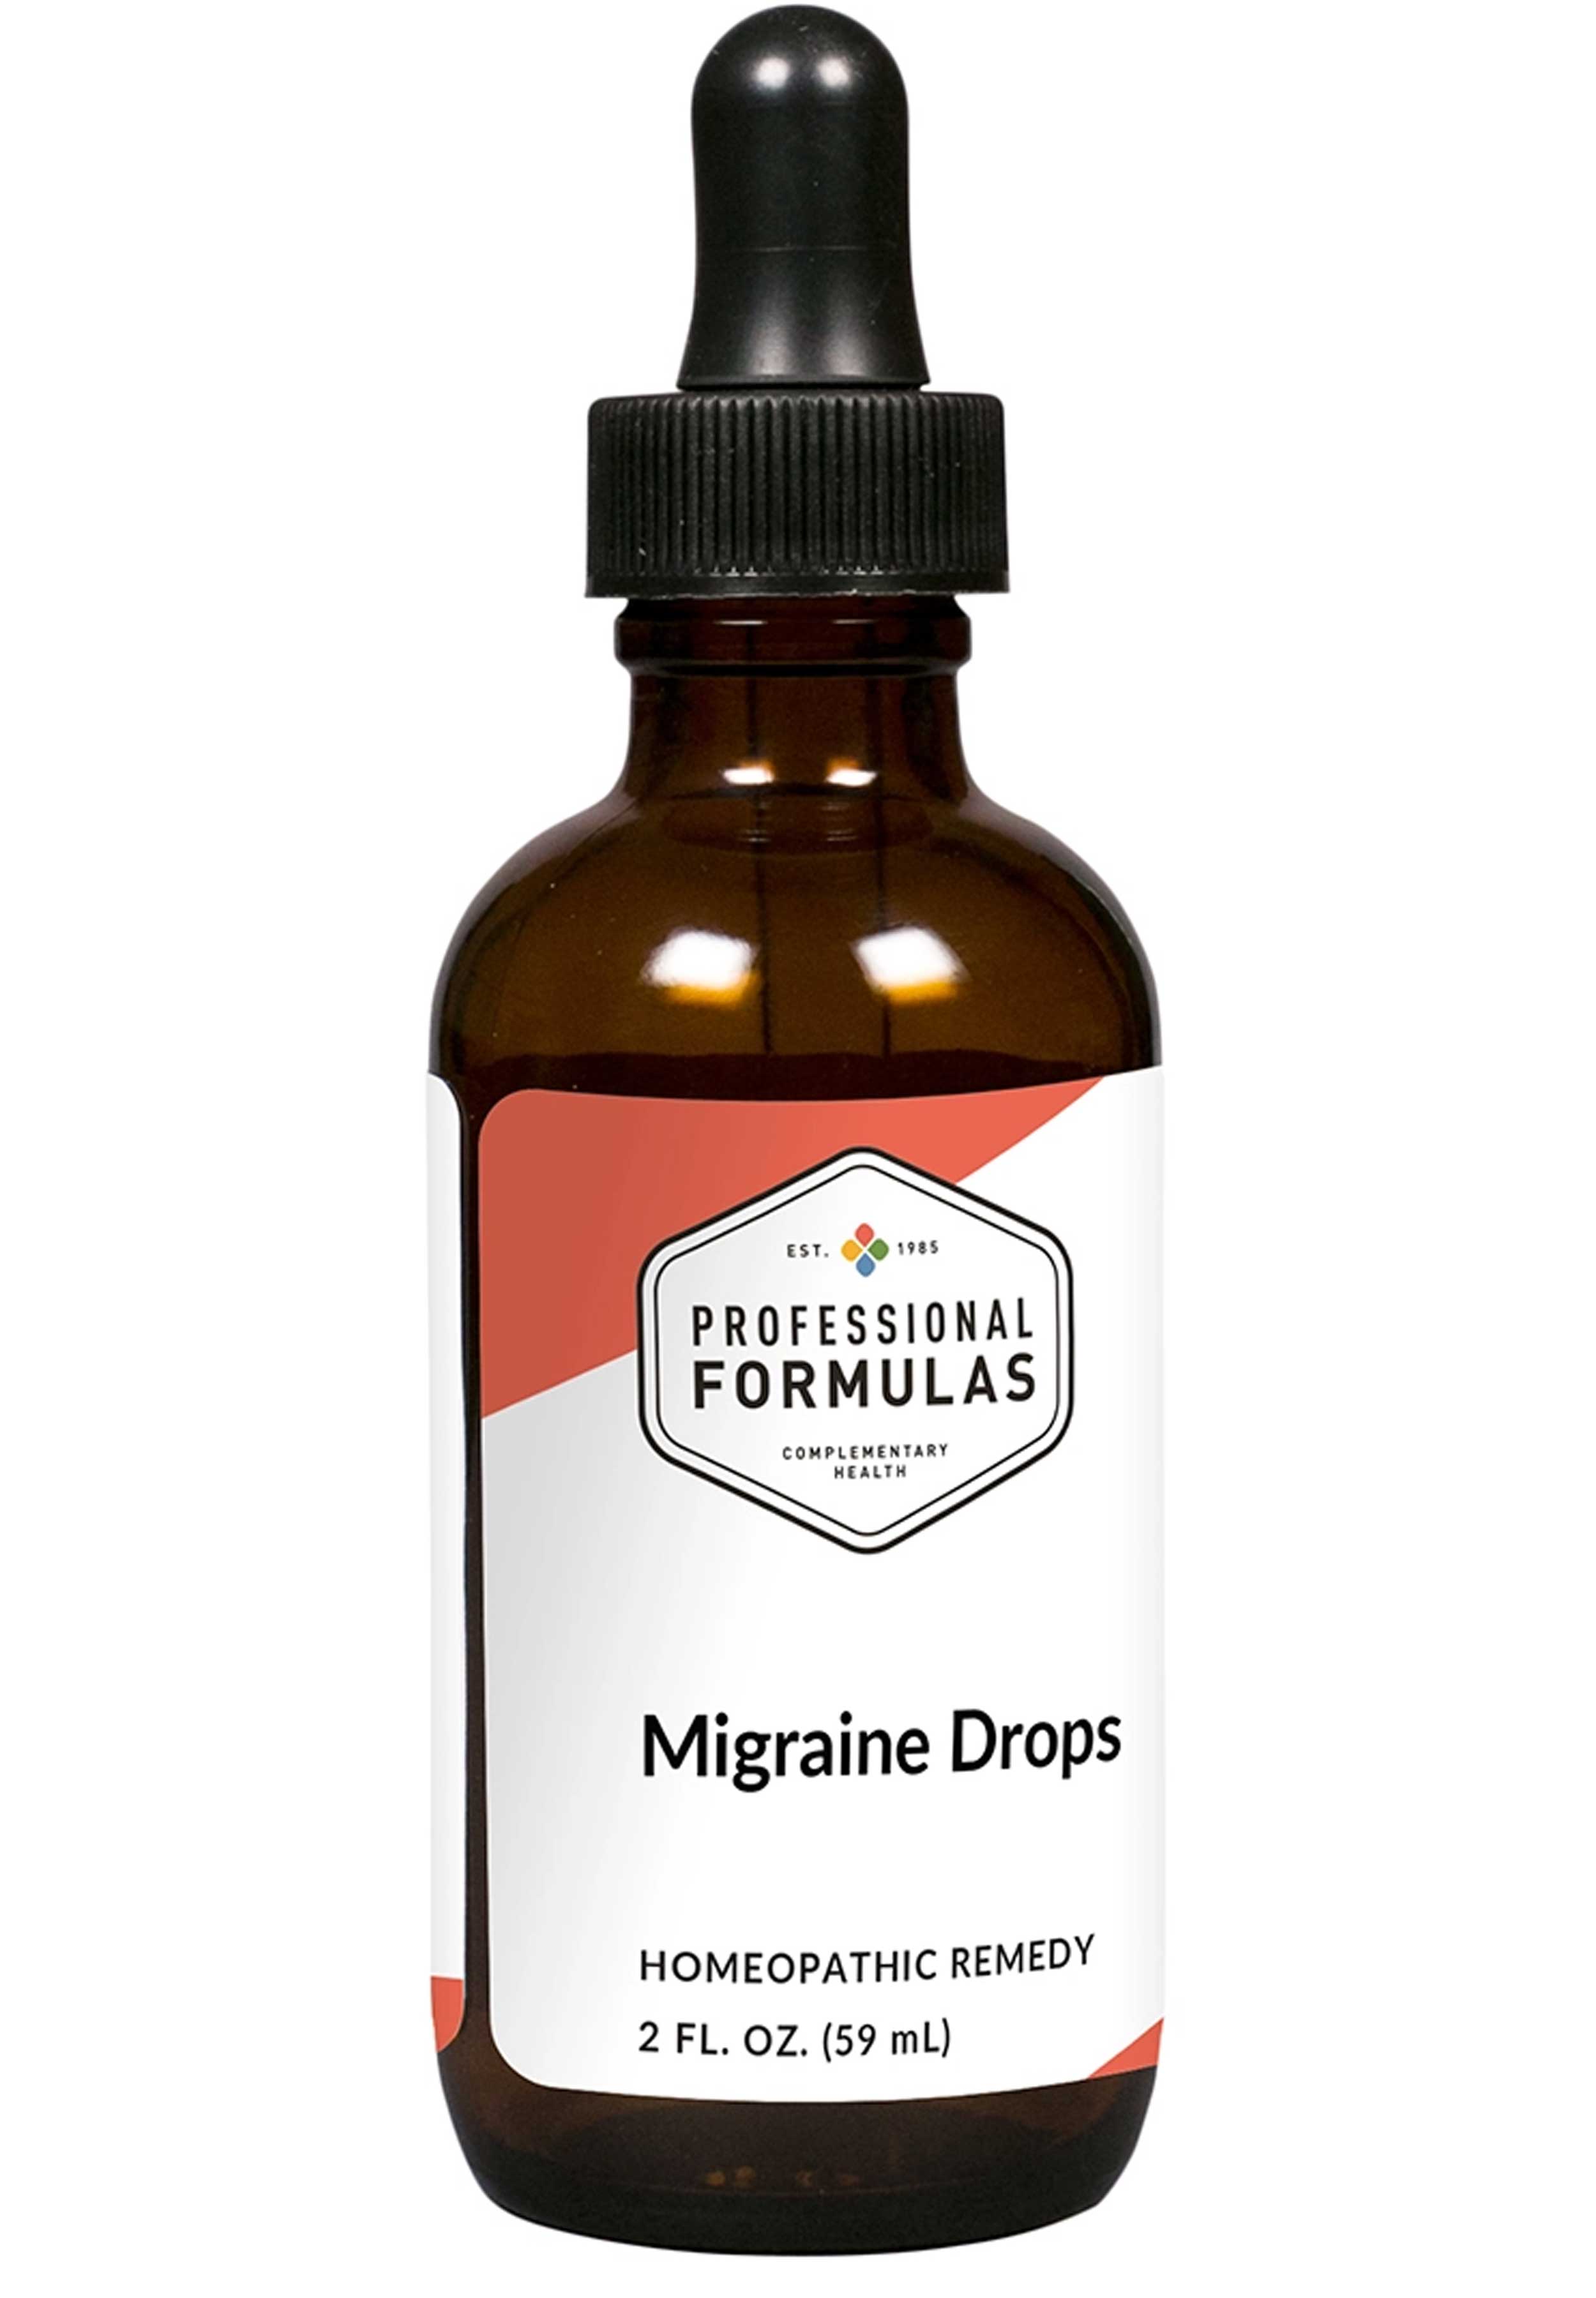 Professional Formulas Migraine Drops